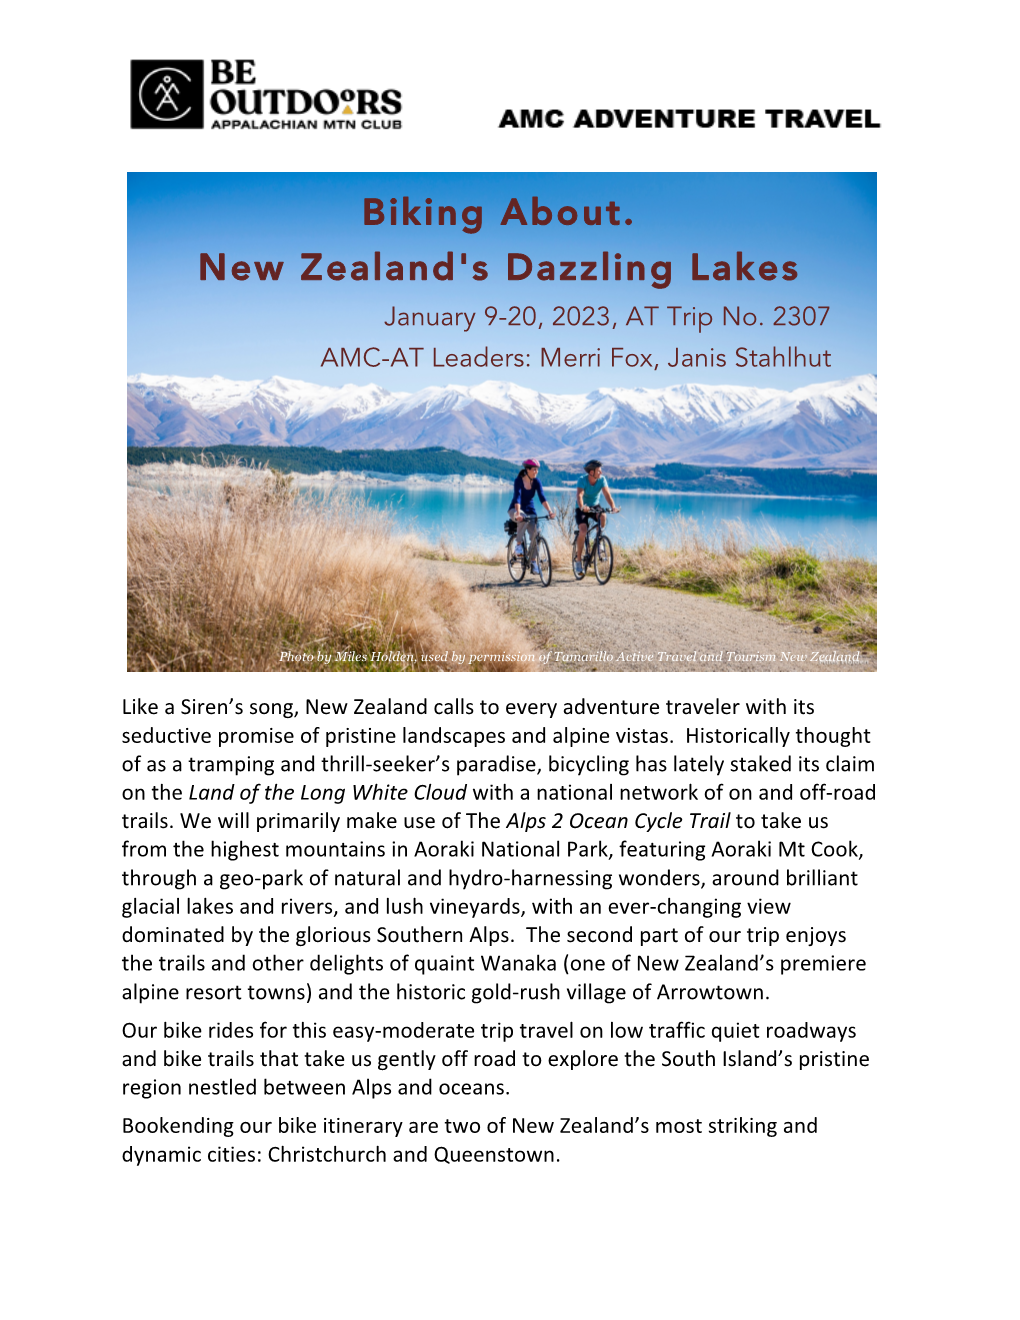 Biking About. New Zealand's Dazzling Lakes January 9-20, 2023, at Trip No